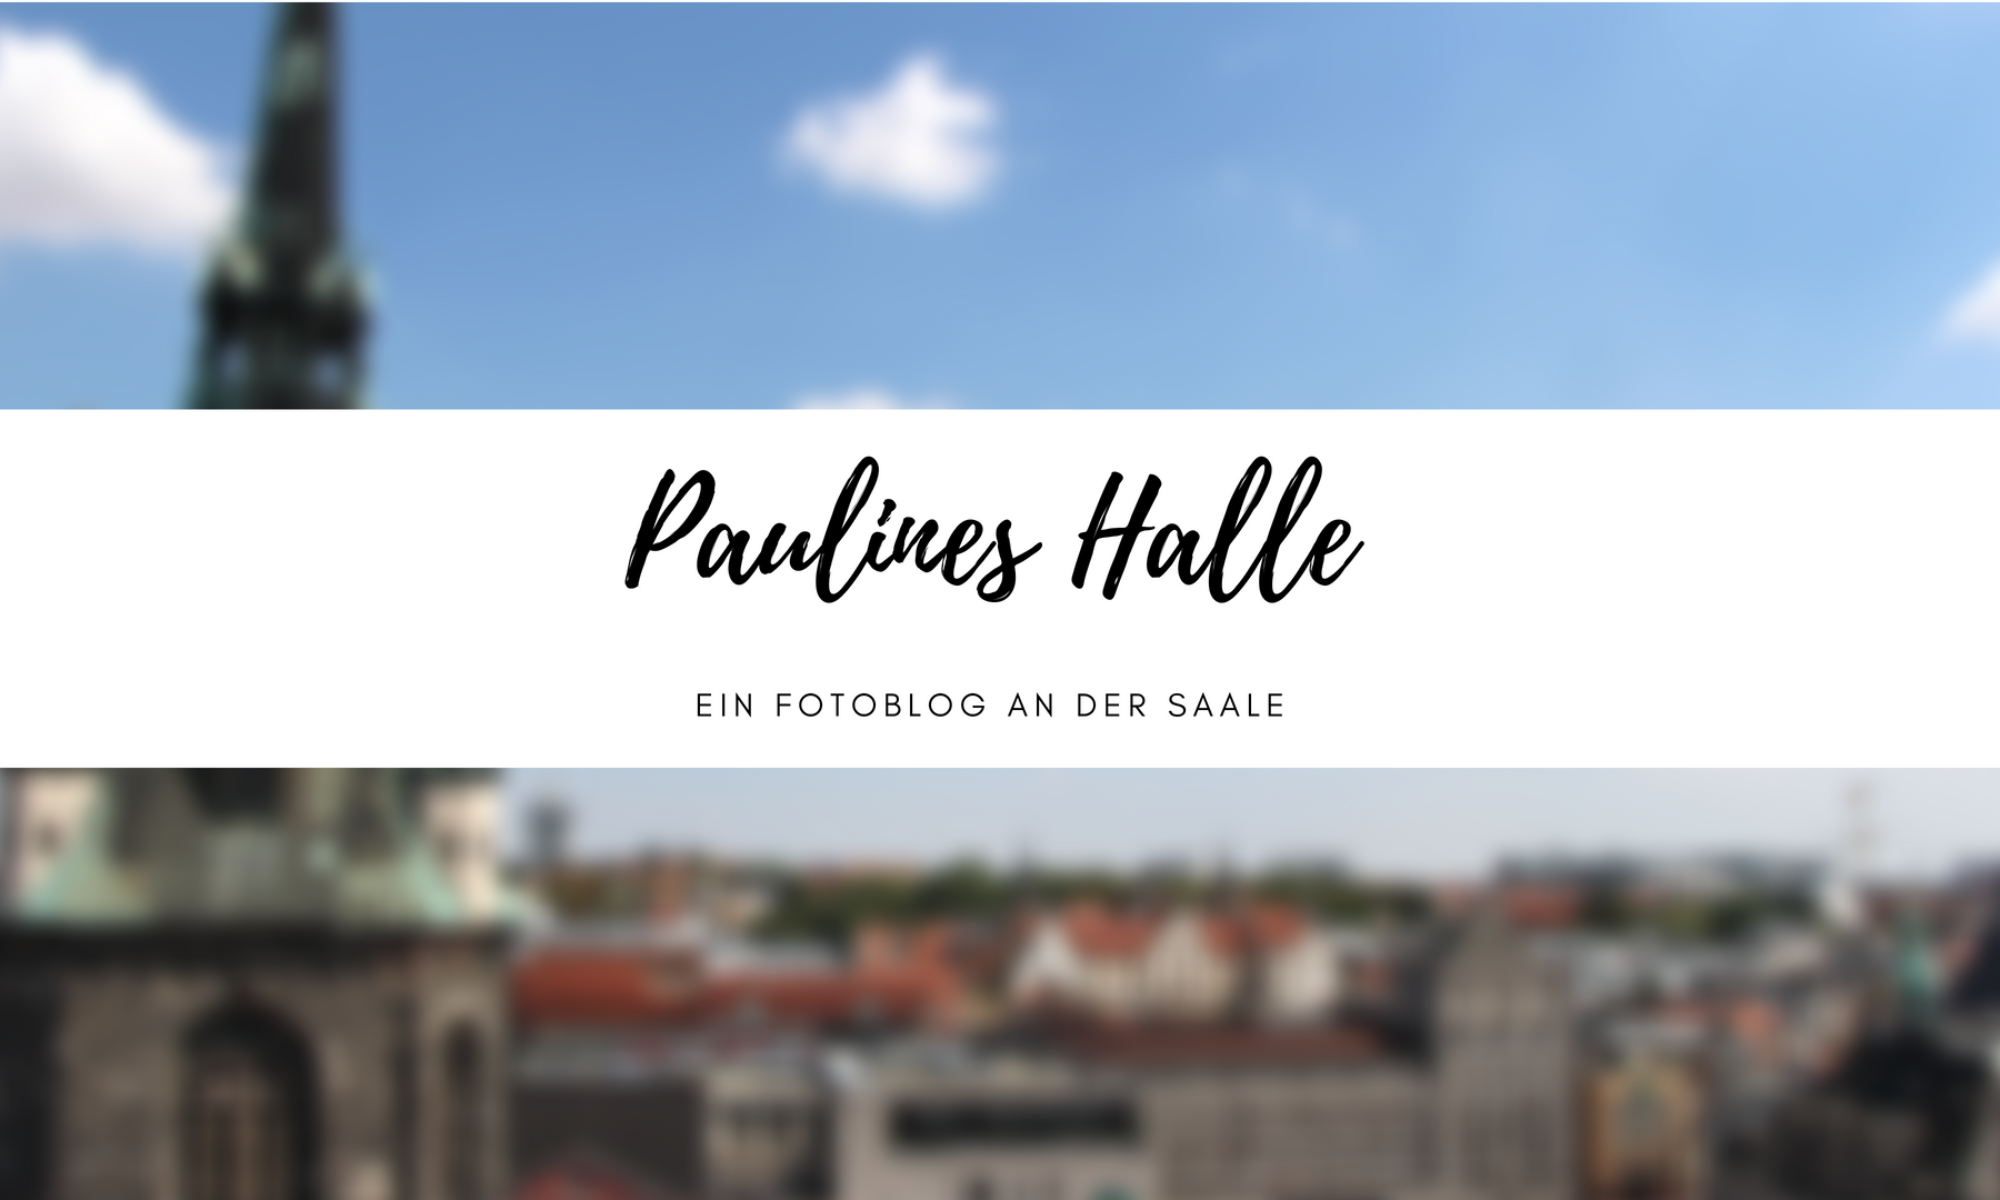 Paulines Halle